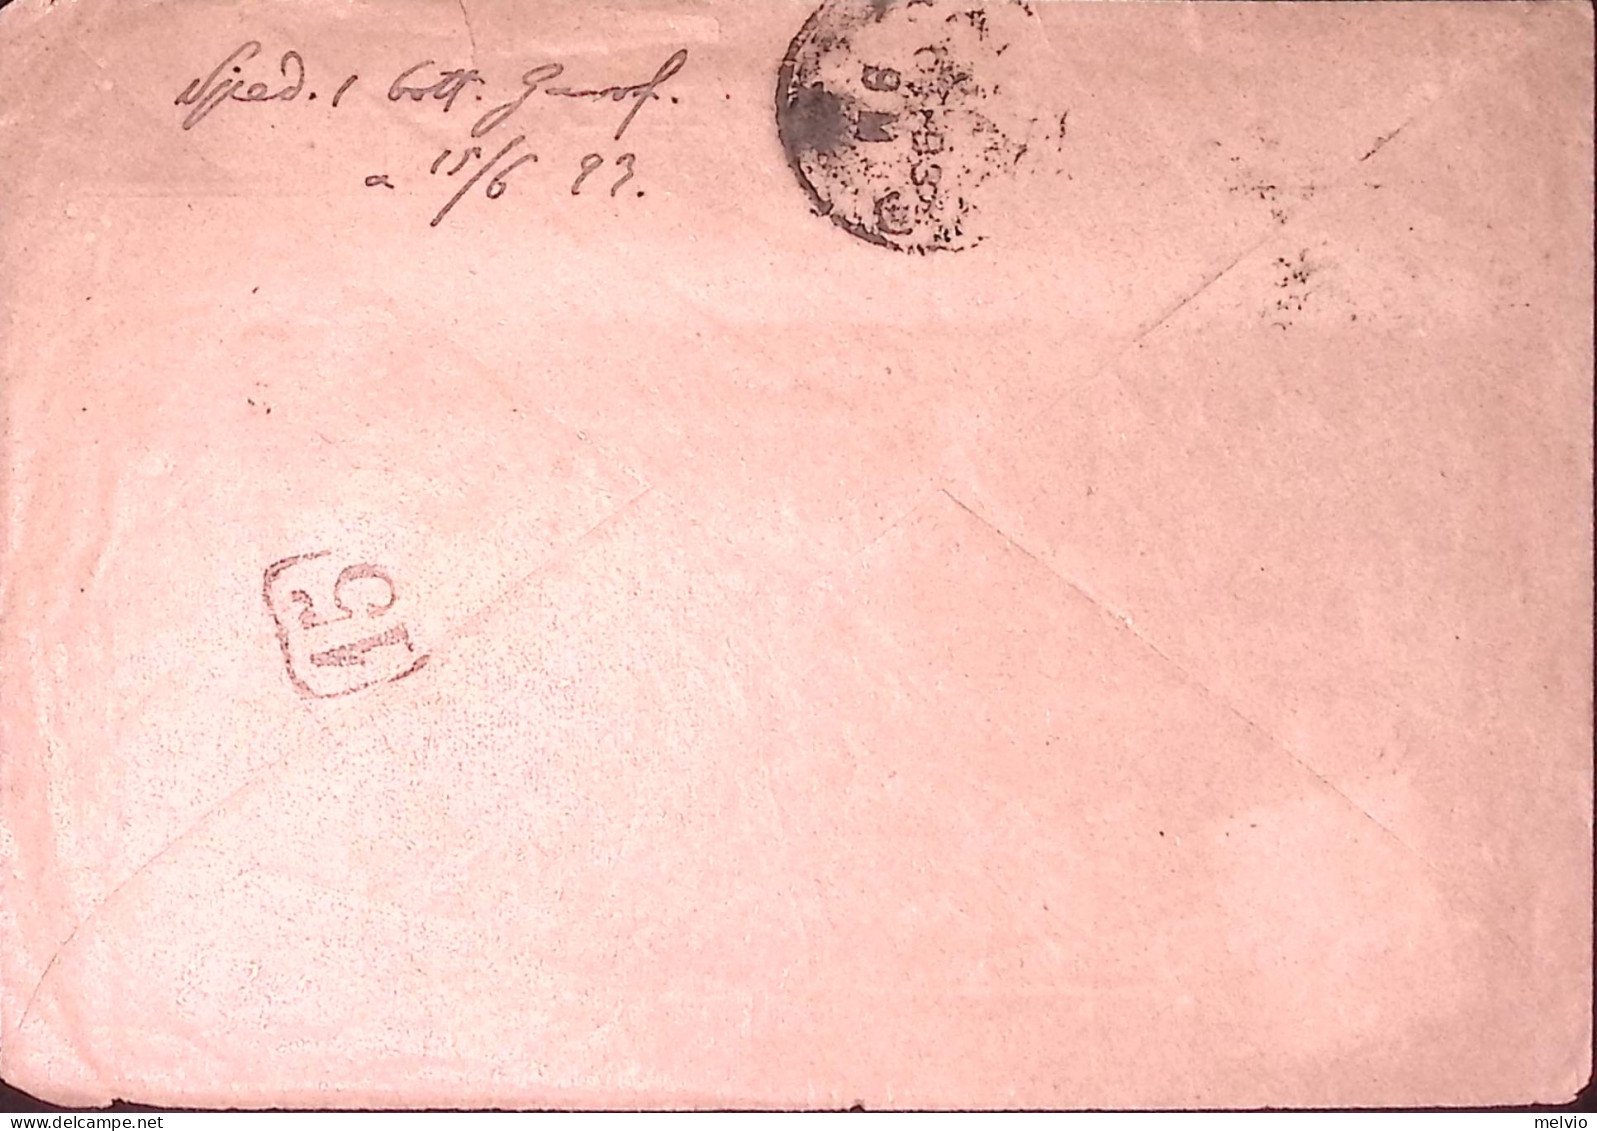 1893-PESARO Ann. Esagonale (12.6) Su Busta Affr. C.20 - Poststempel